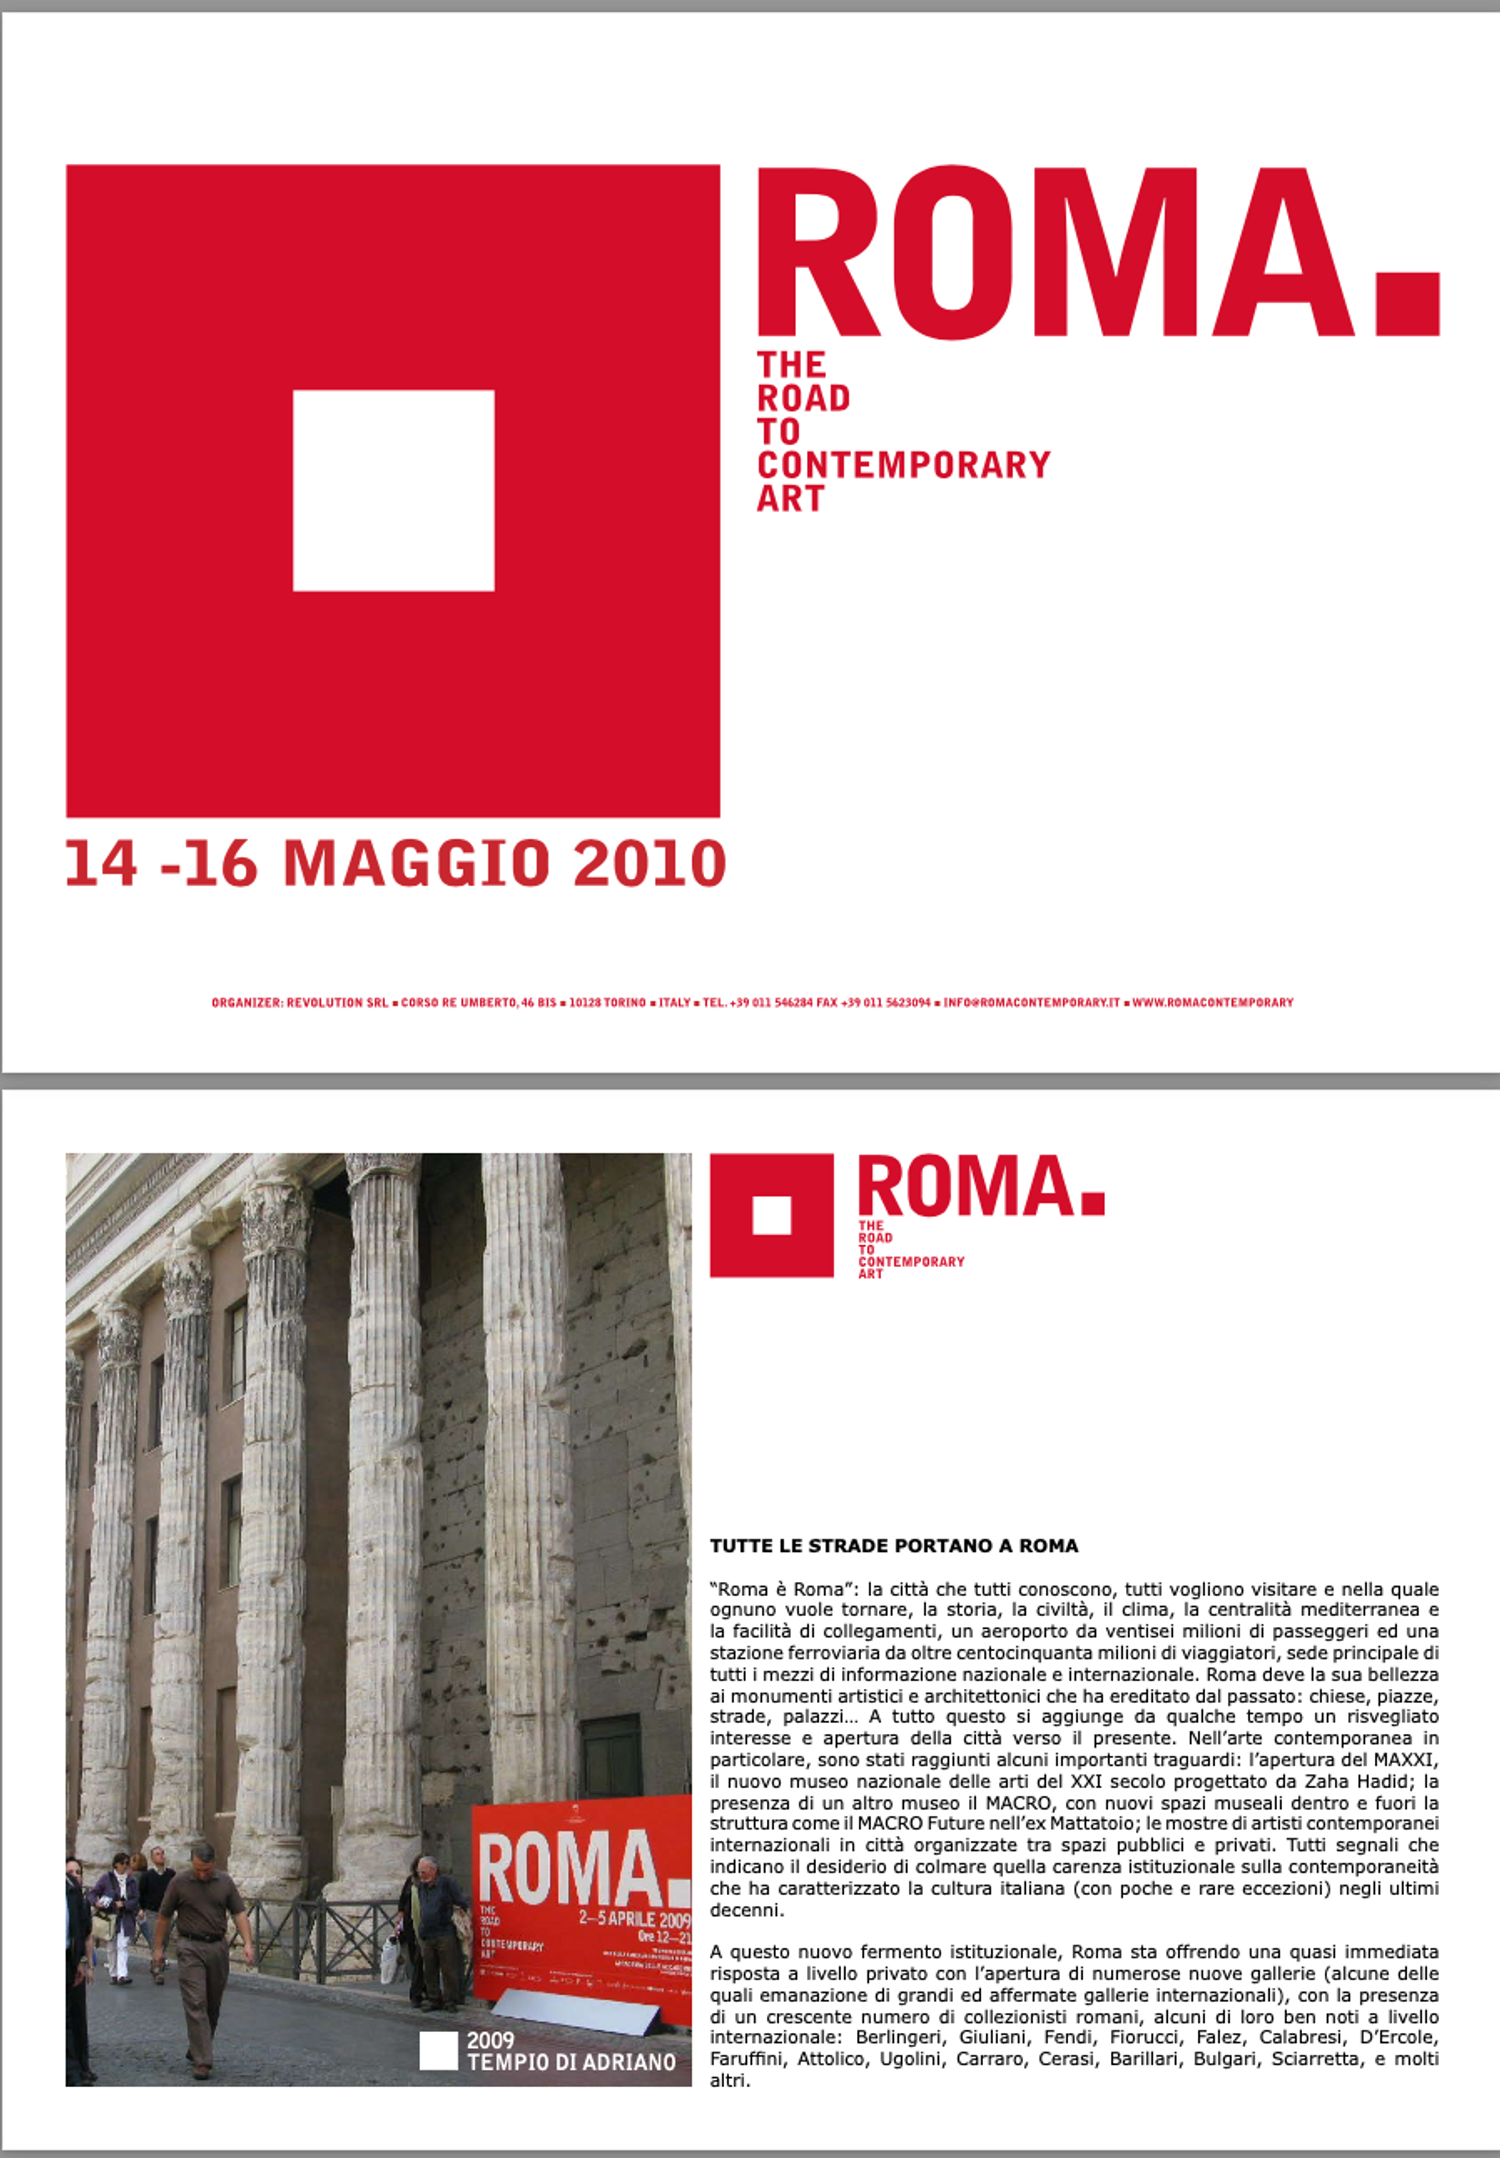 Rome Museum of Contemporary Art